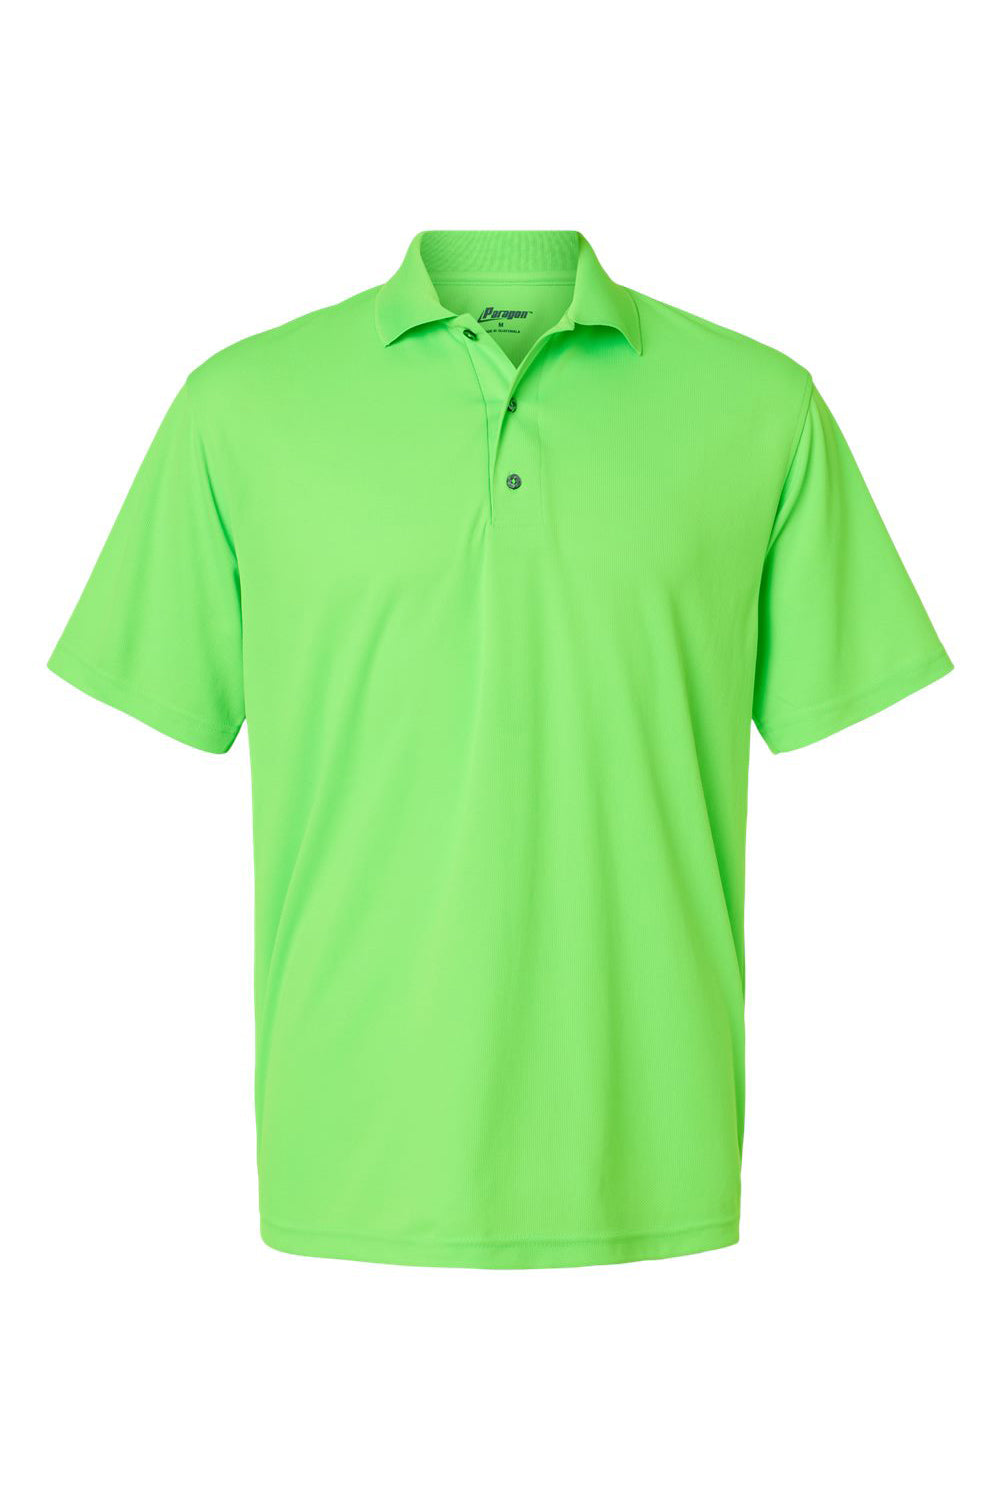 Paragon 100 Mens Saratoga Performance Mini Mesh Short Sleeve Polo Shirt Neon Lime Green Flat Front